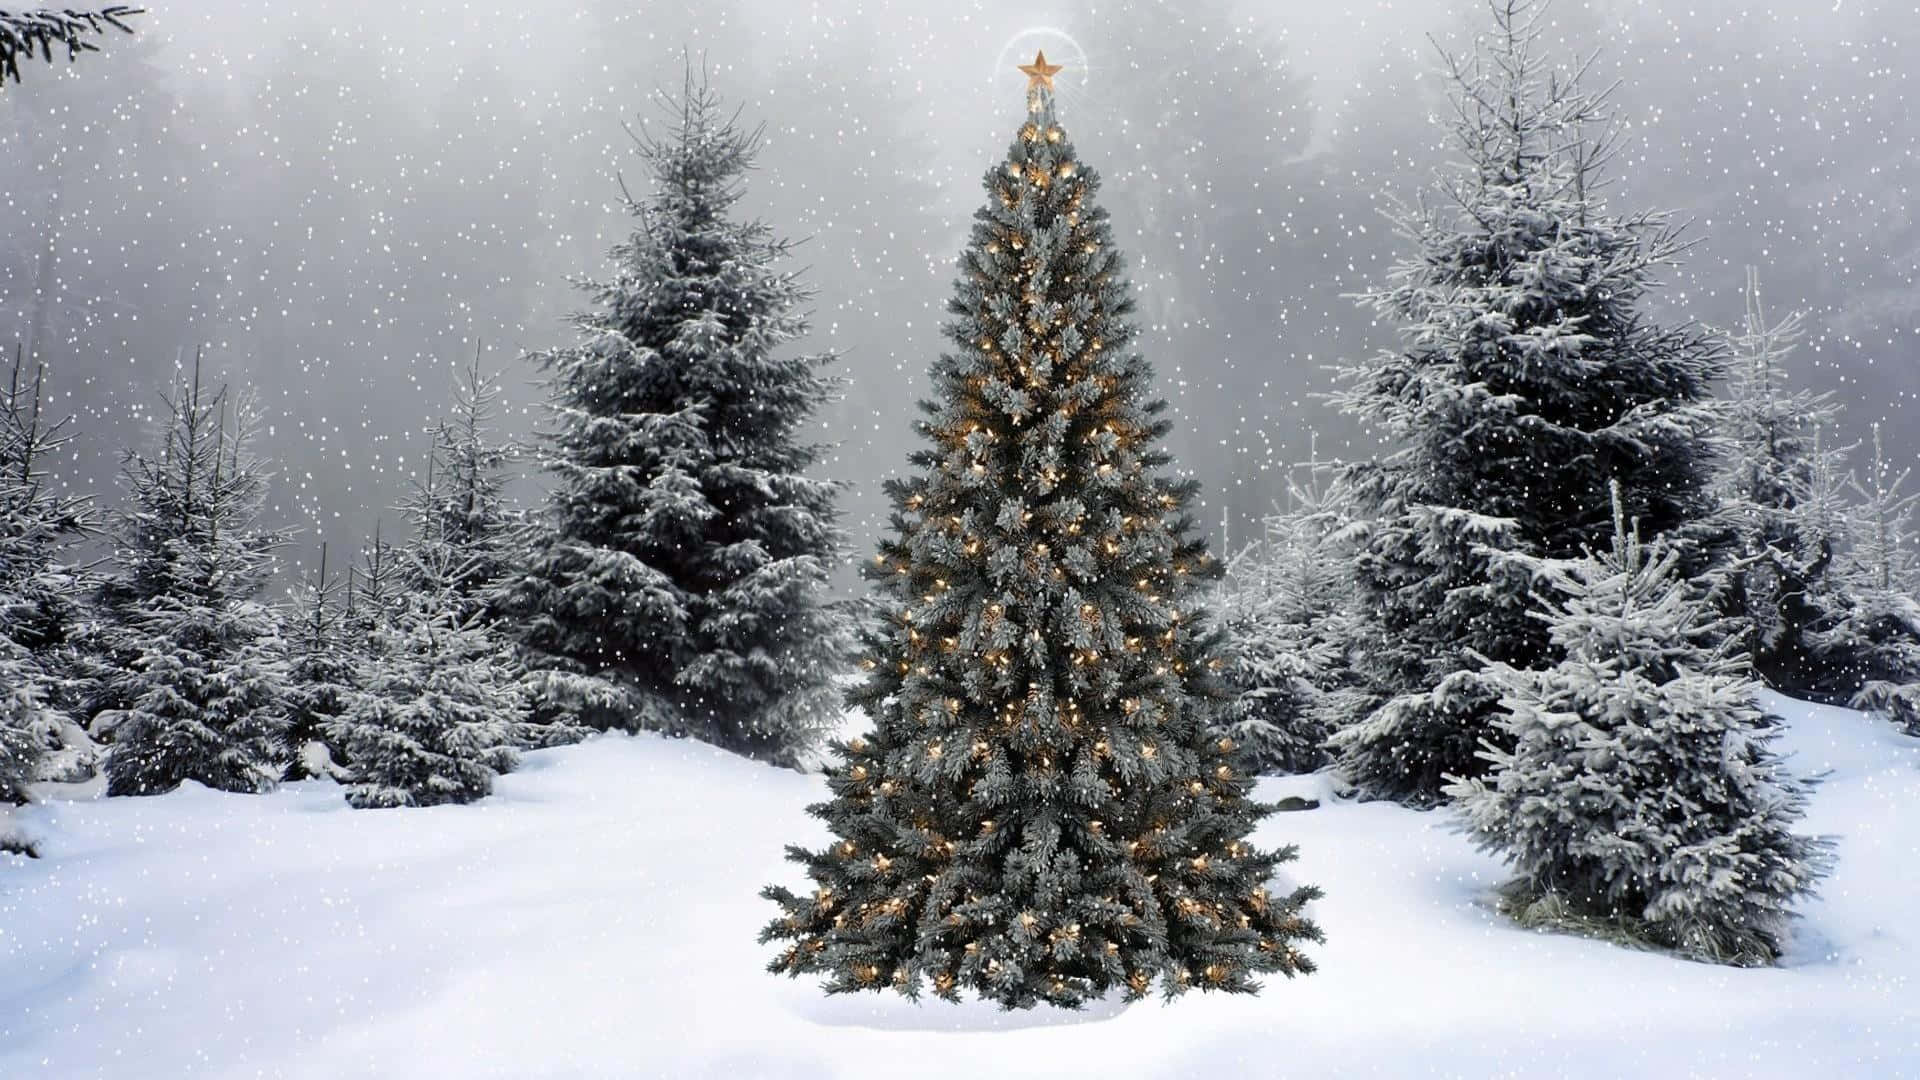  Winter Weihnachten Hintergrundbild 1920x1080. Download Conifers Cozy Winter Aesthetic Christmas Tree Wallpaper